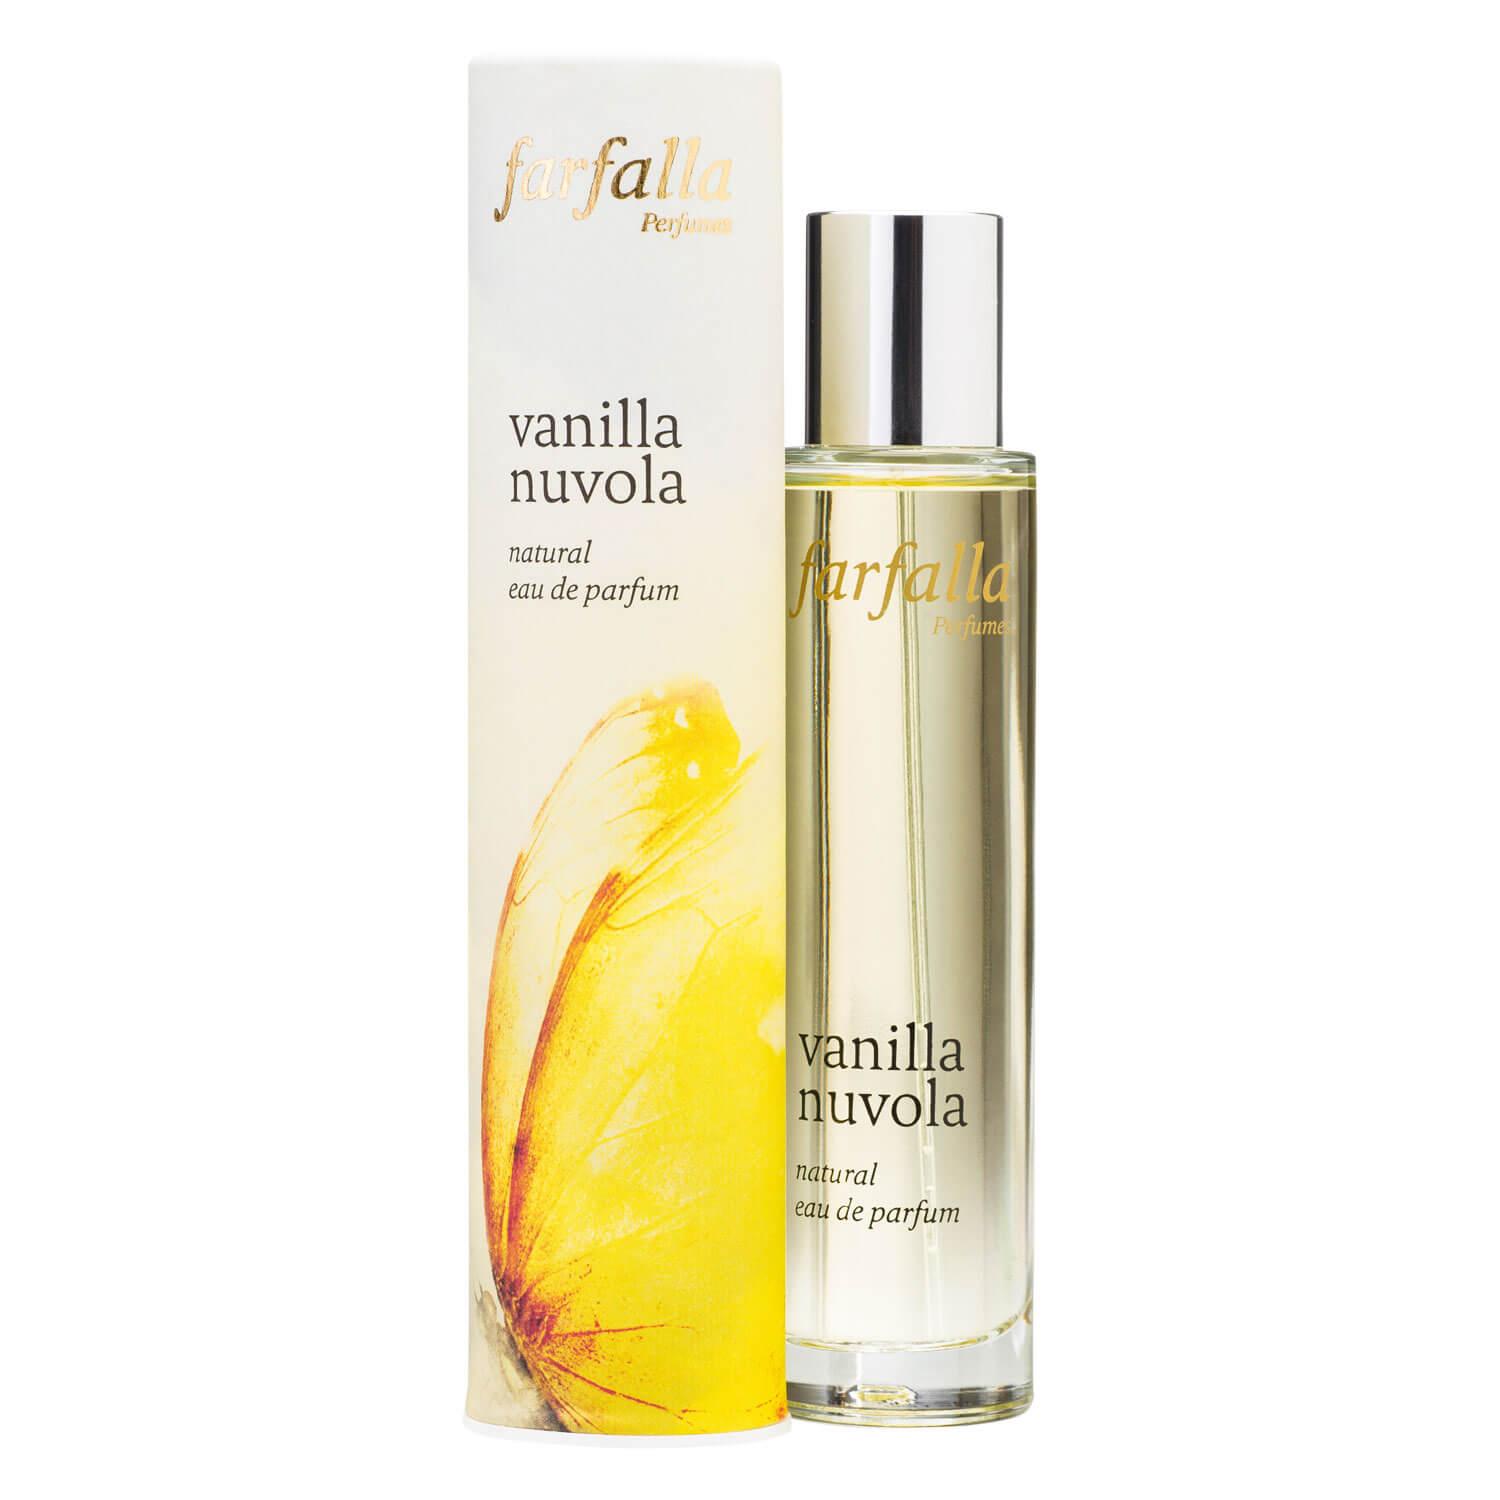 Farfalla Fragrance - Vanilla Nuvola Natural Eau de Parfum